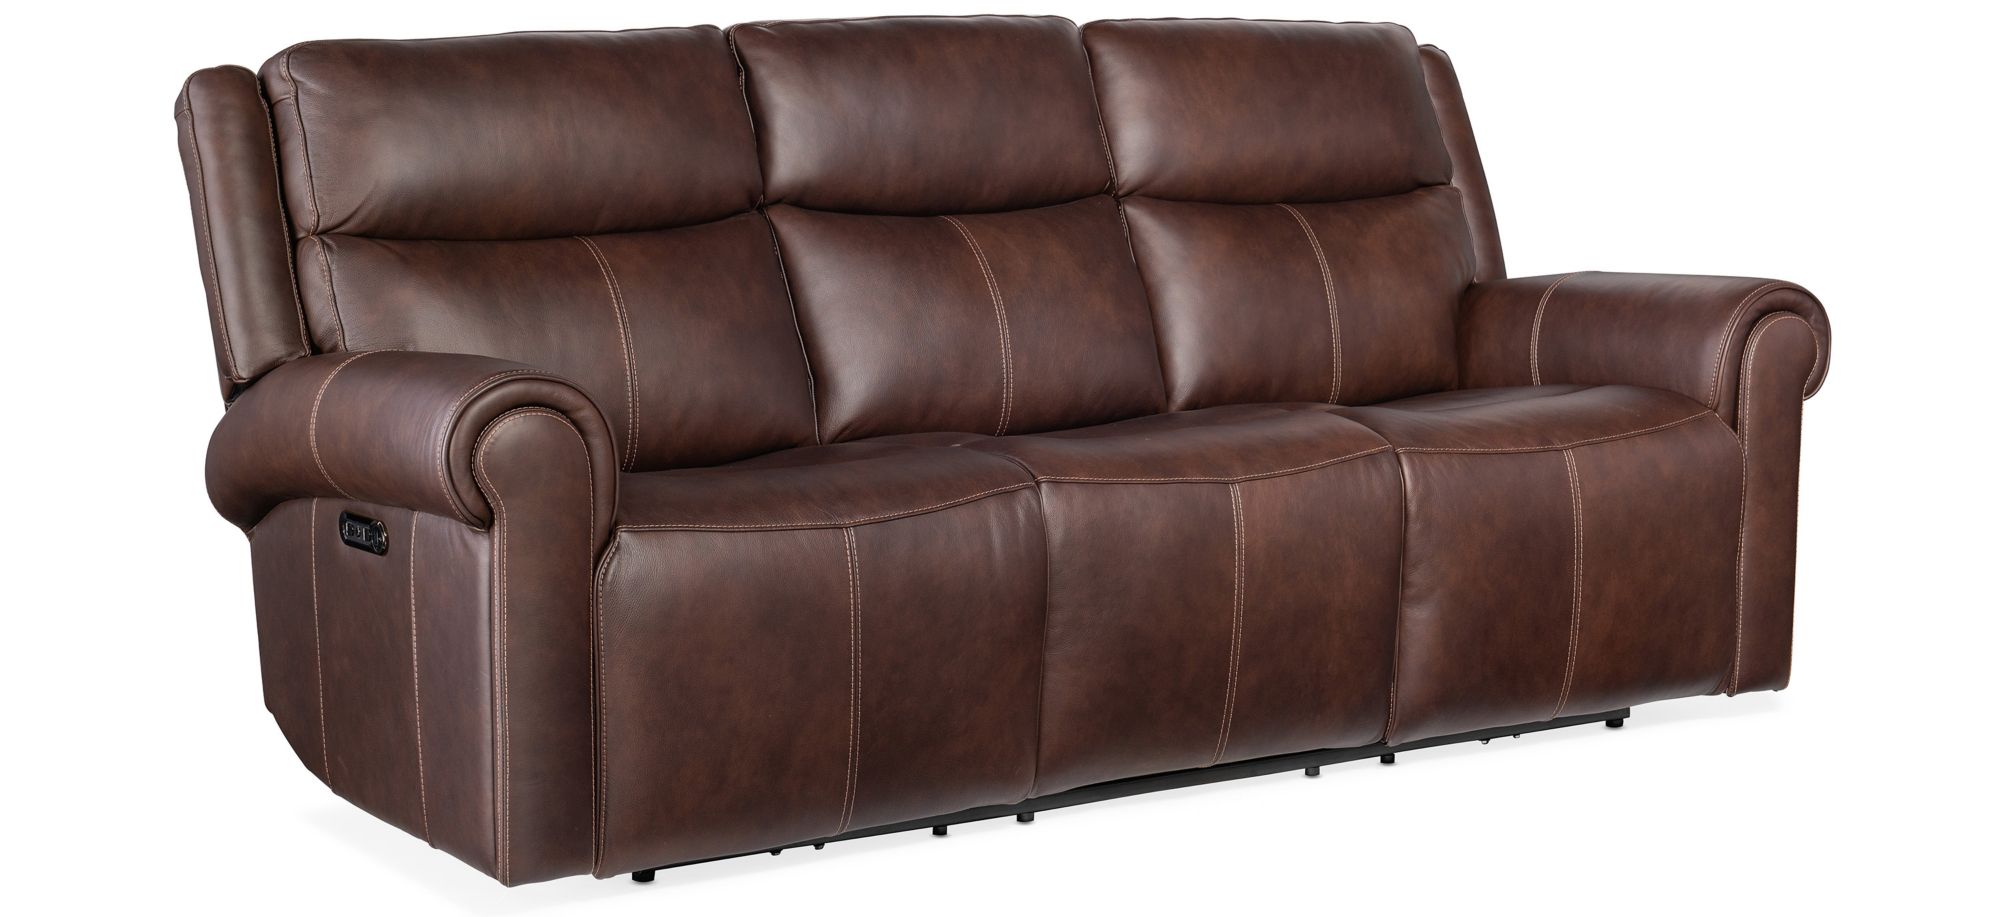 Oberon Zero Gravity Power Sofa in Caruso Walnut by Hooker Furniture